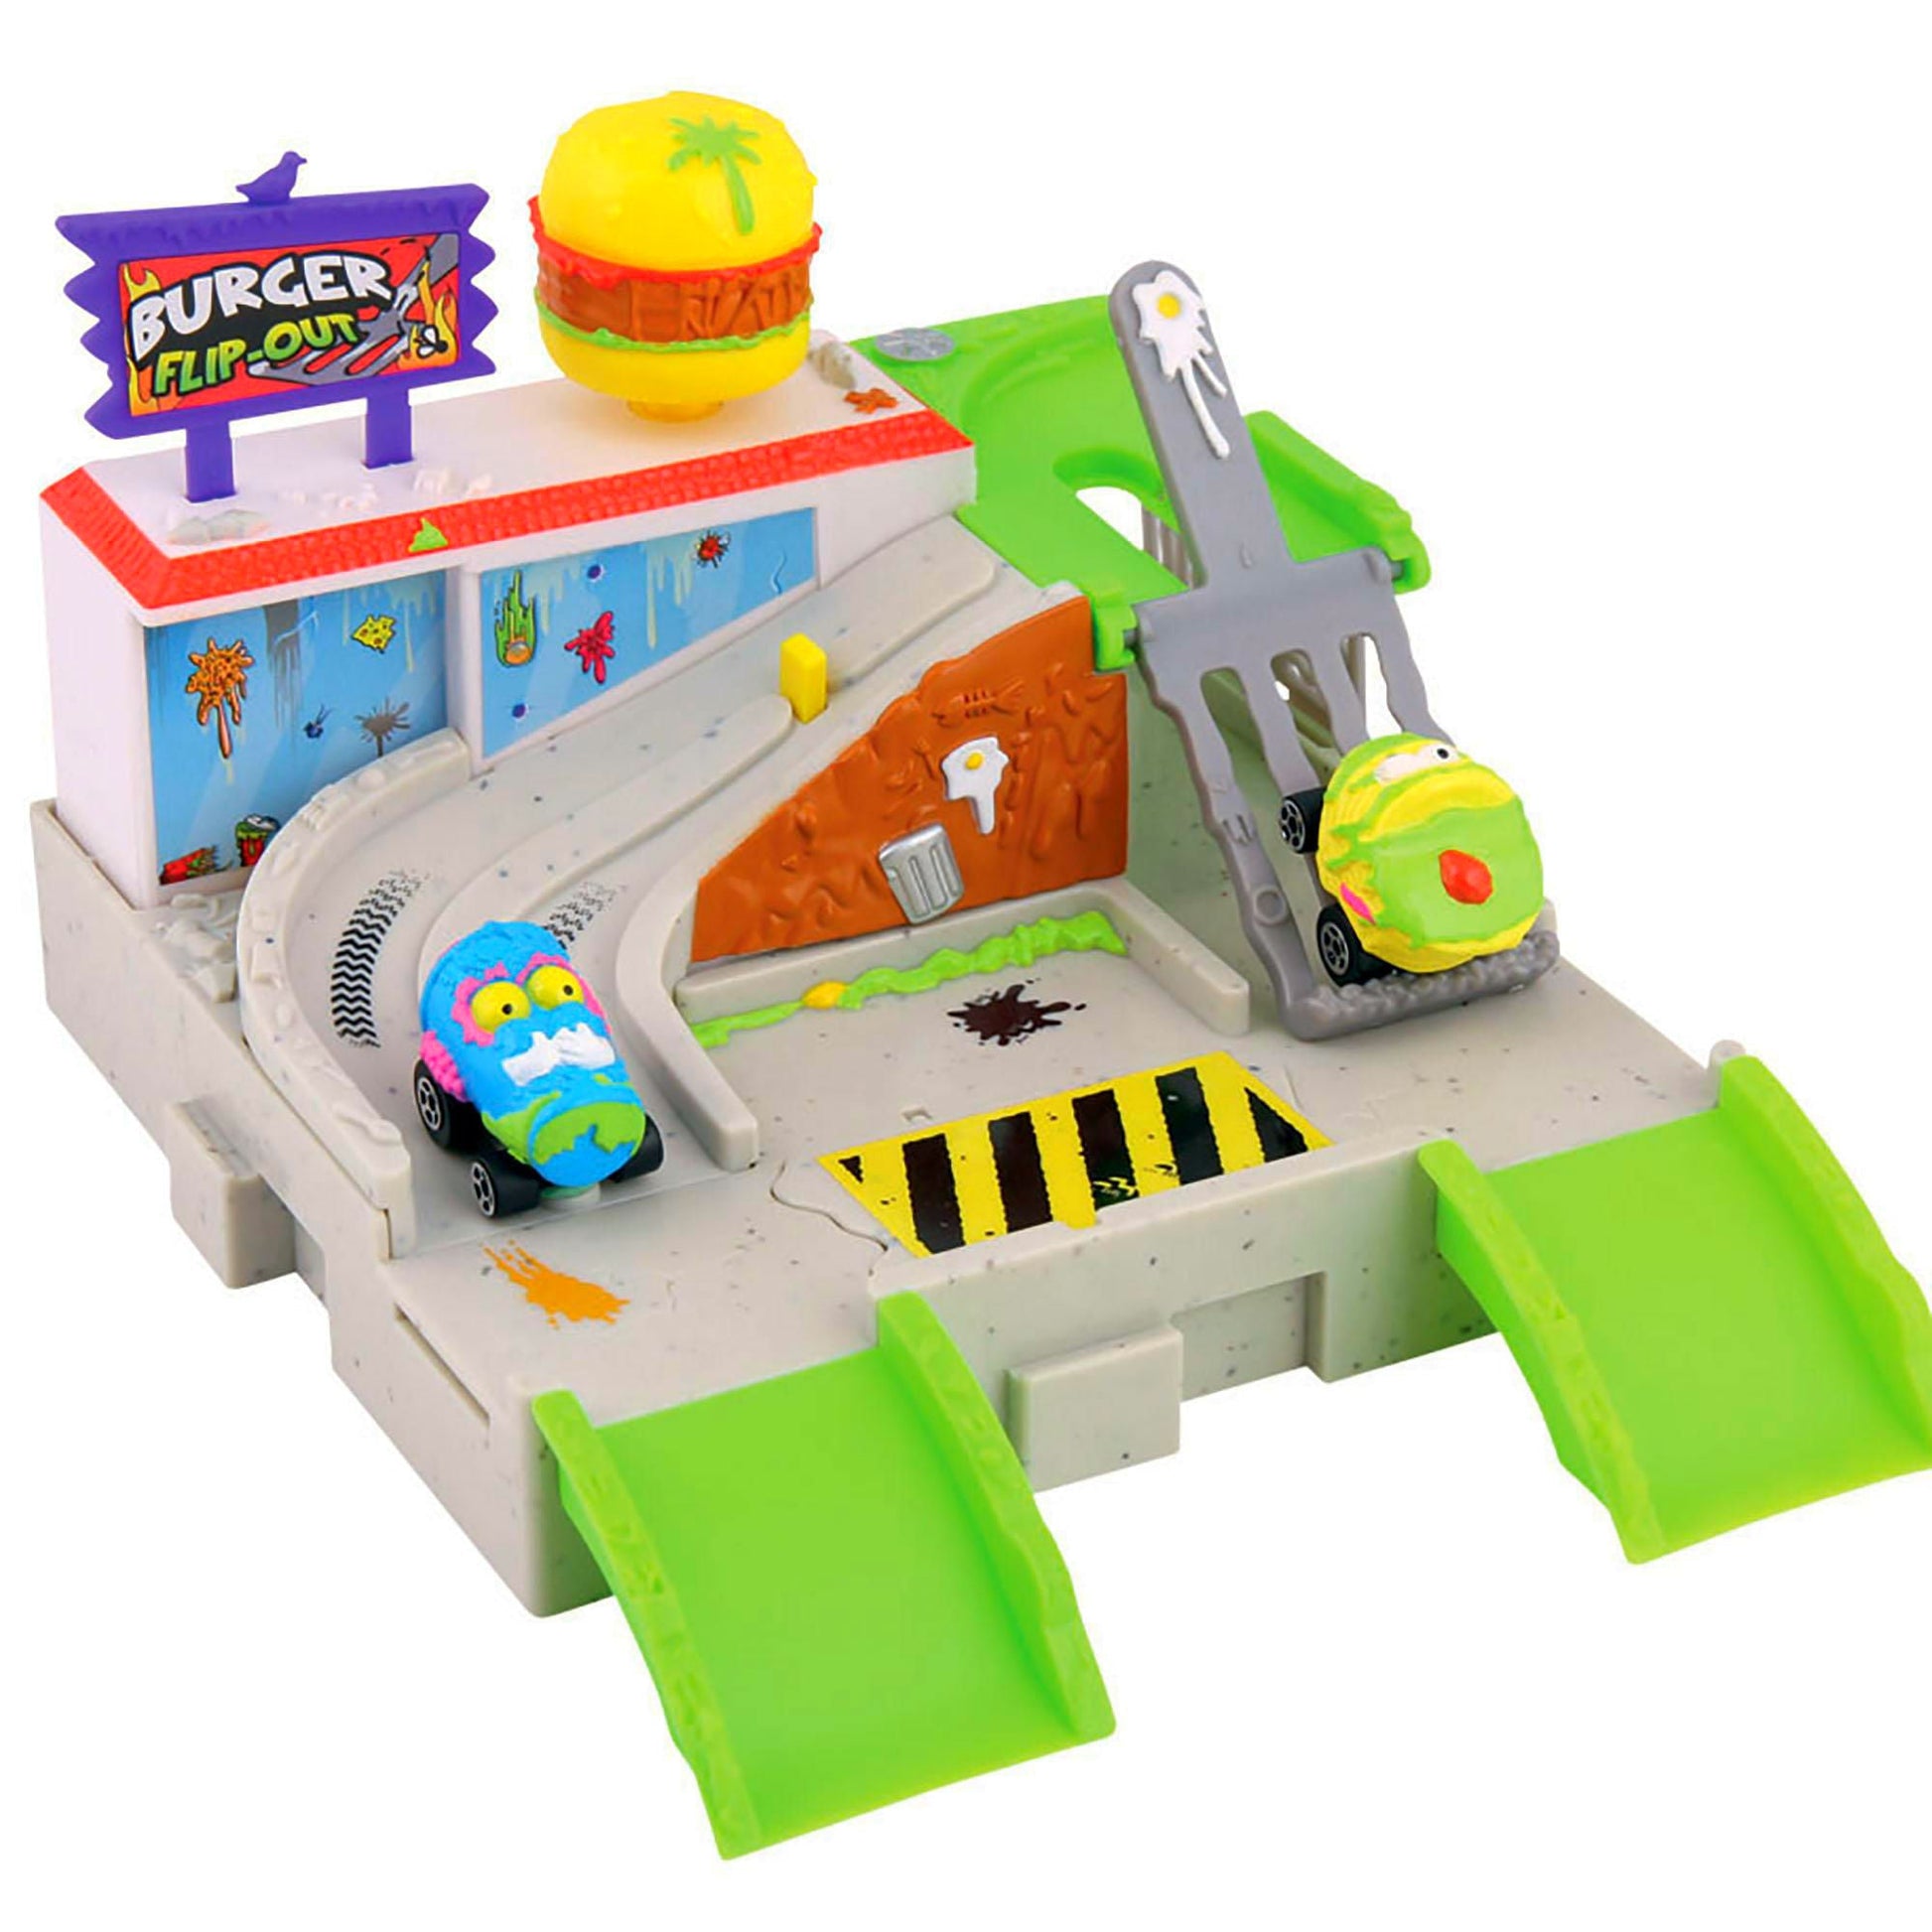 Trash Wheels Pack Burger Flip Out Playset Toy - buy-online